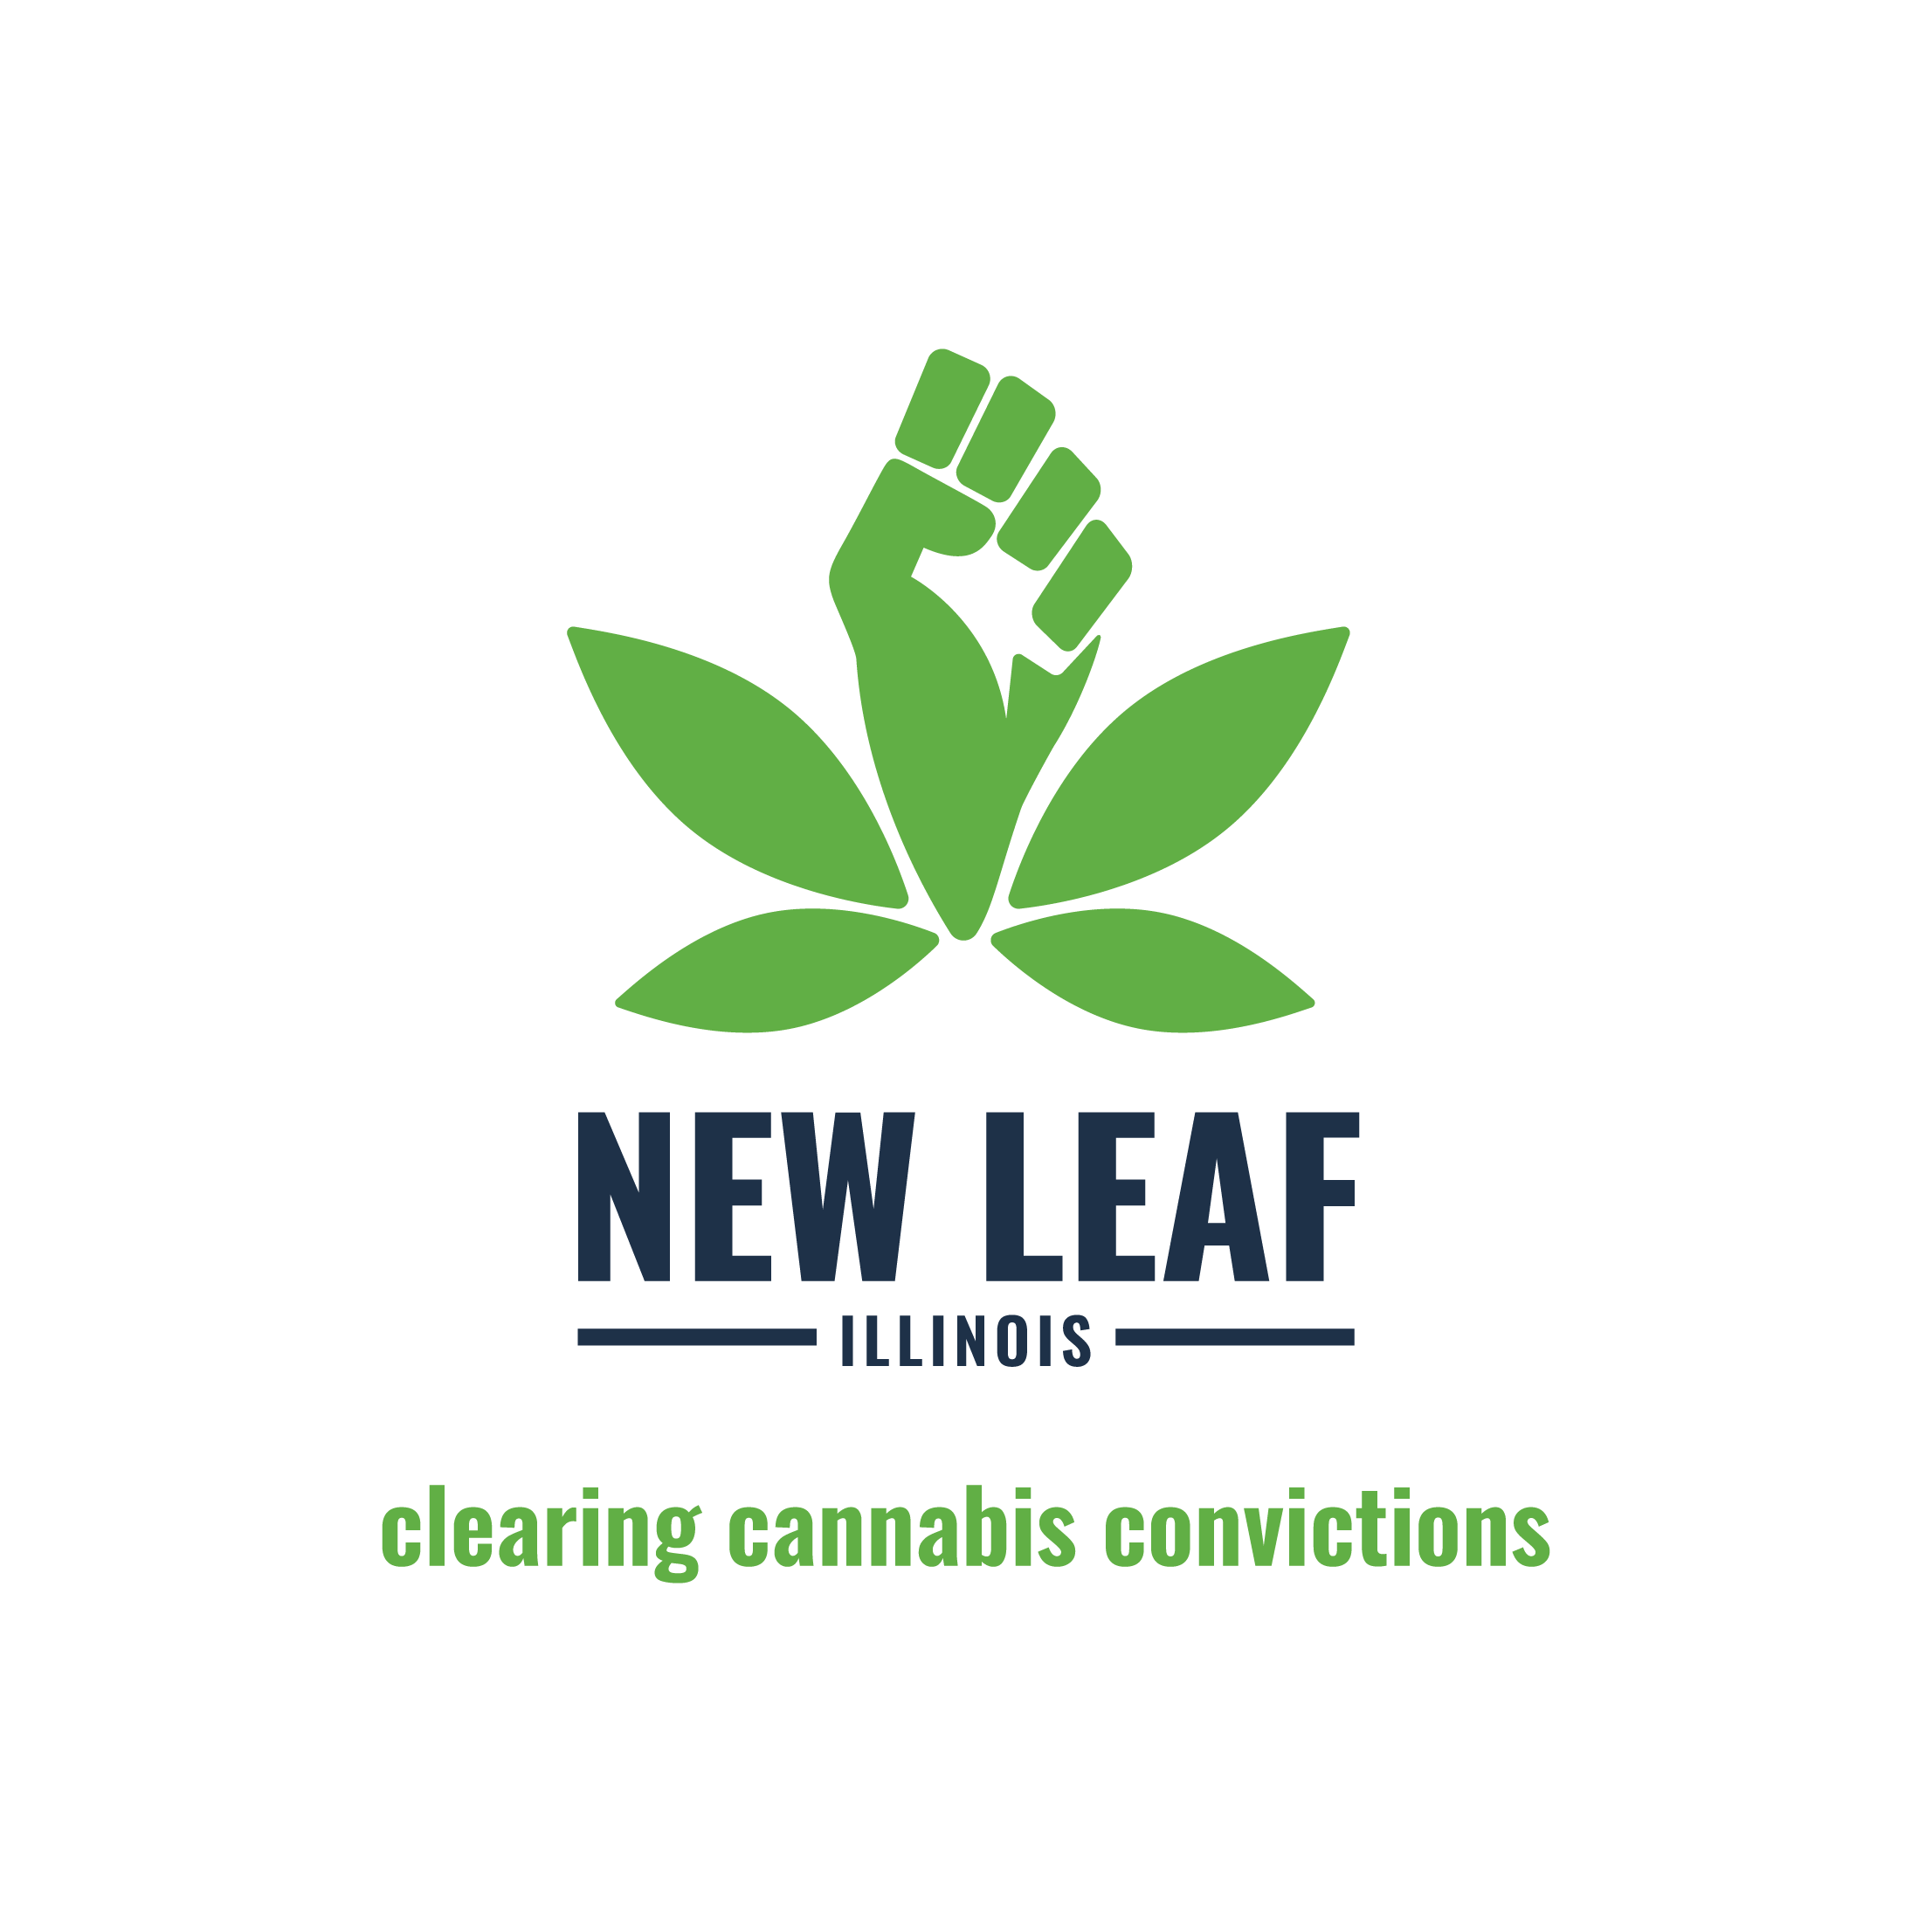 New Leaf Illinois logo